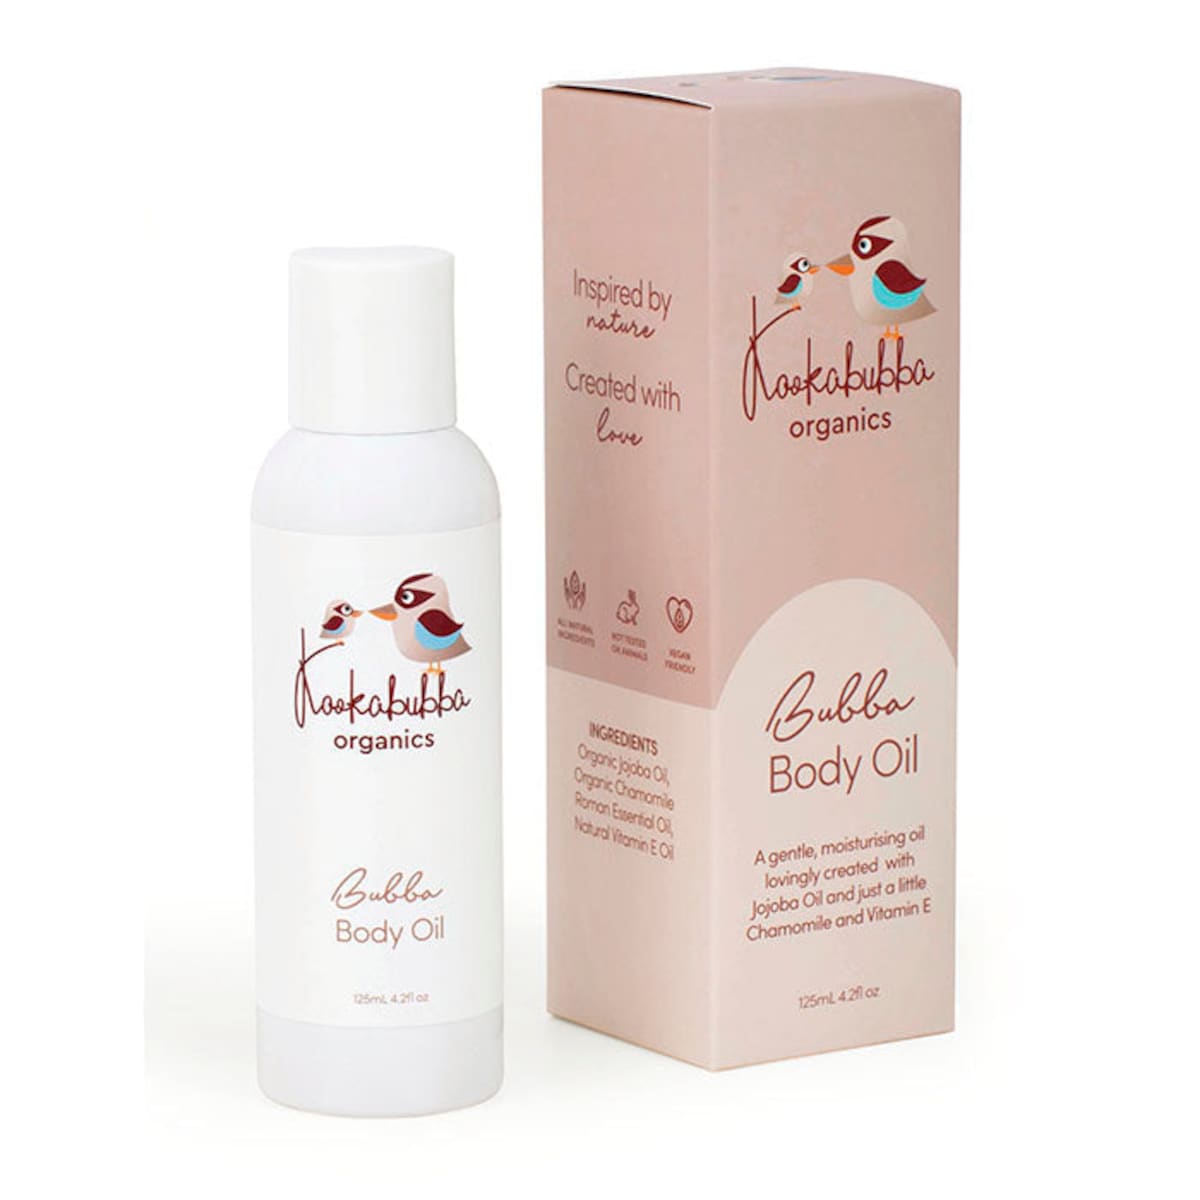 Kookabubba Organics Bubba Body Oil 125ml